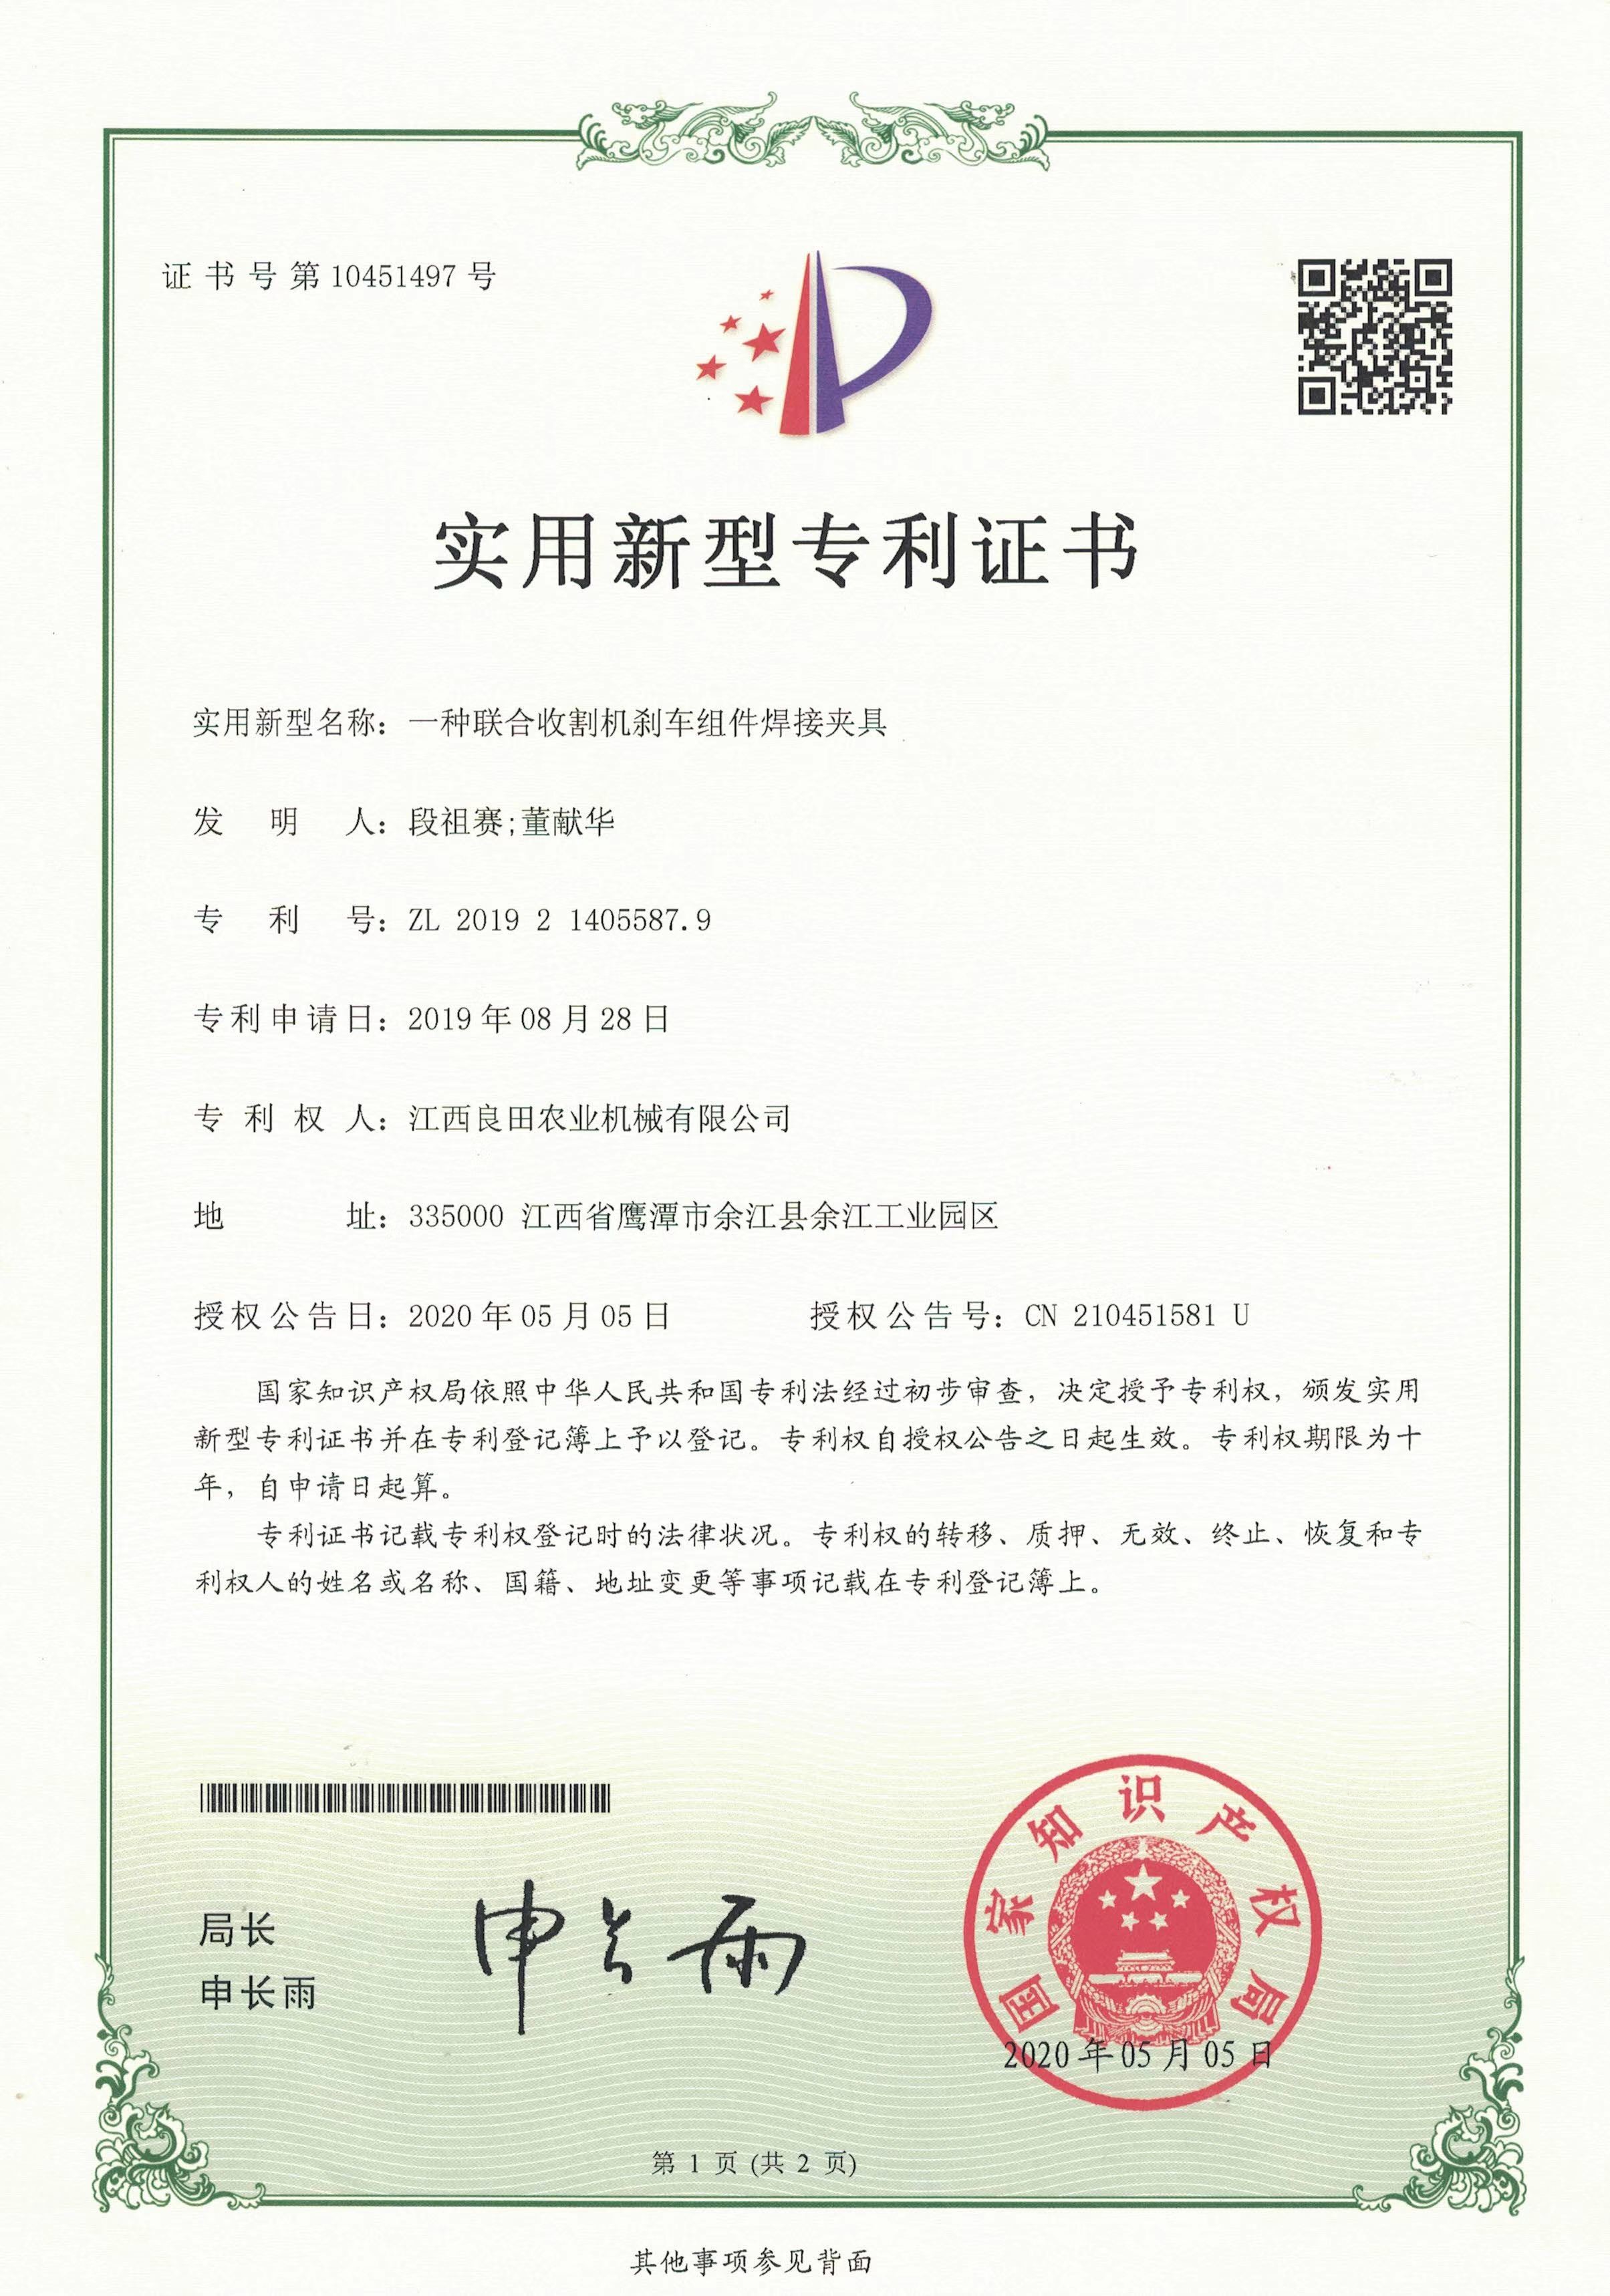 China Wuhan Wubota Machinery Co., Ltd. Certification